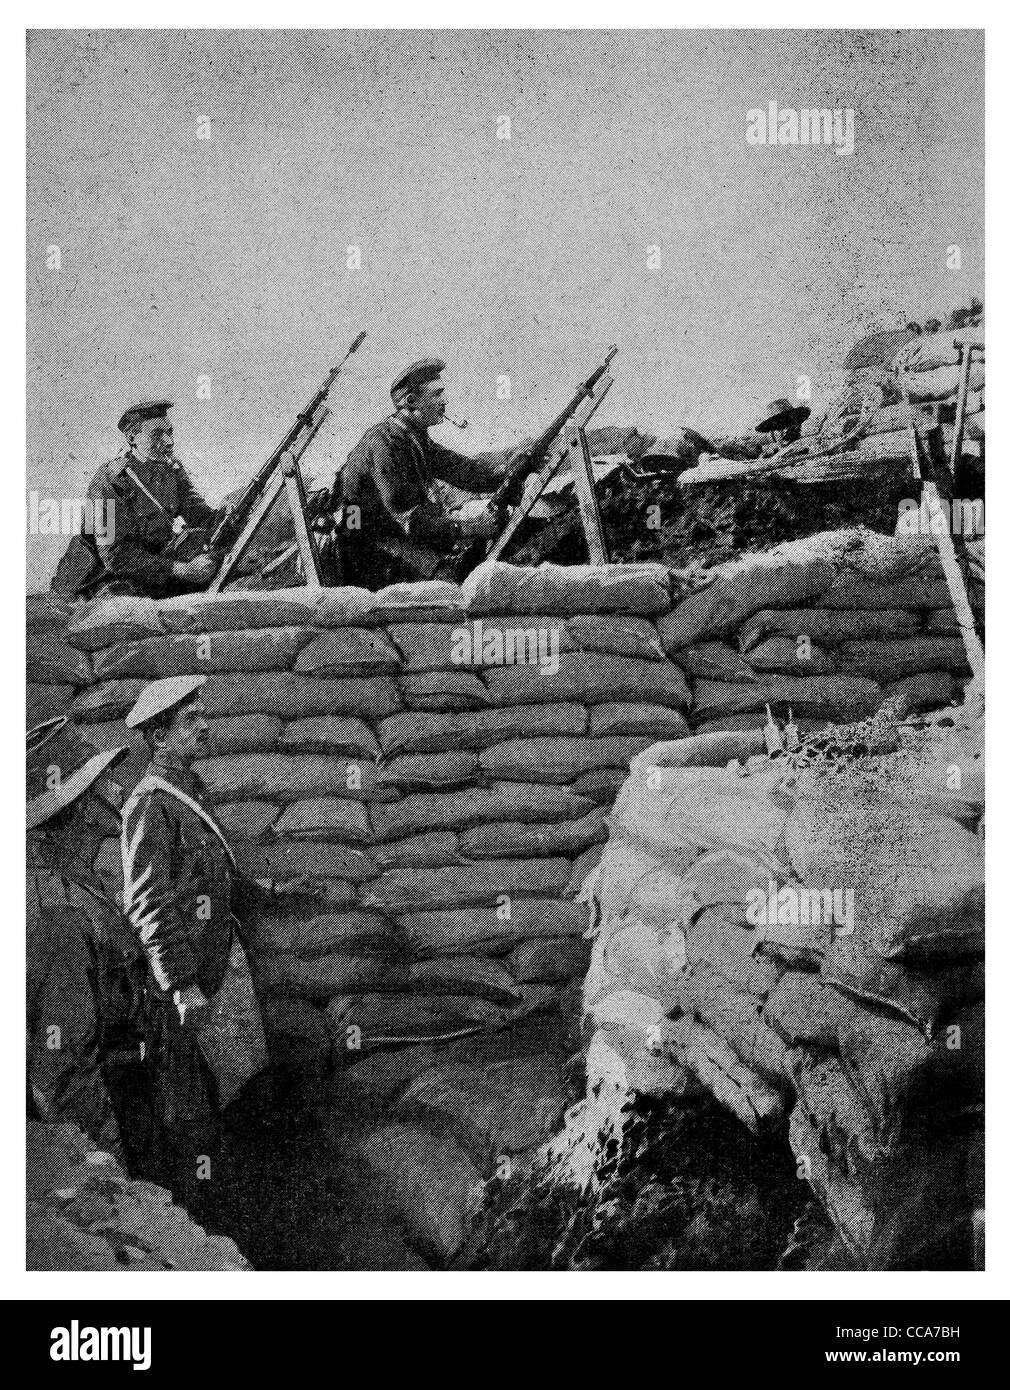 1916 avant la ligne de tir de grenades Grenades mortier de tranchée sac de sable bombe bombe arme projectile explosif Banque D'Images